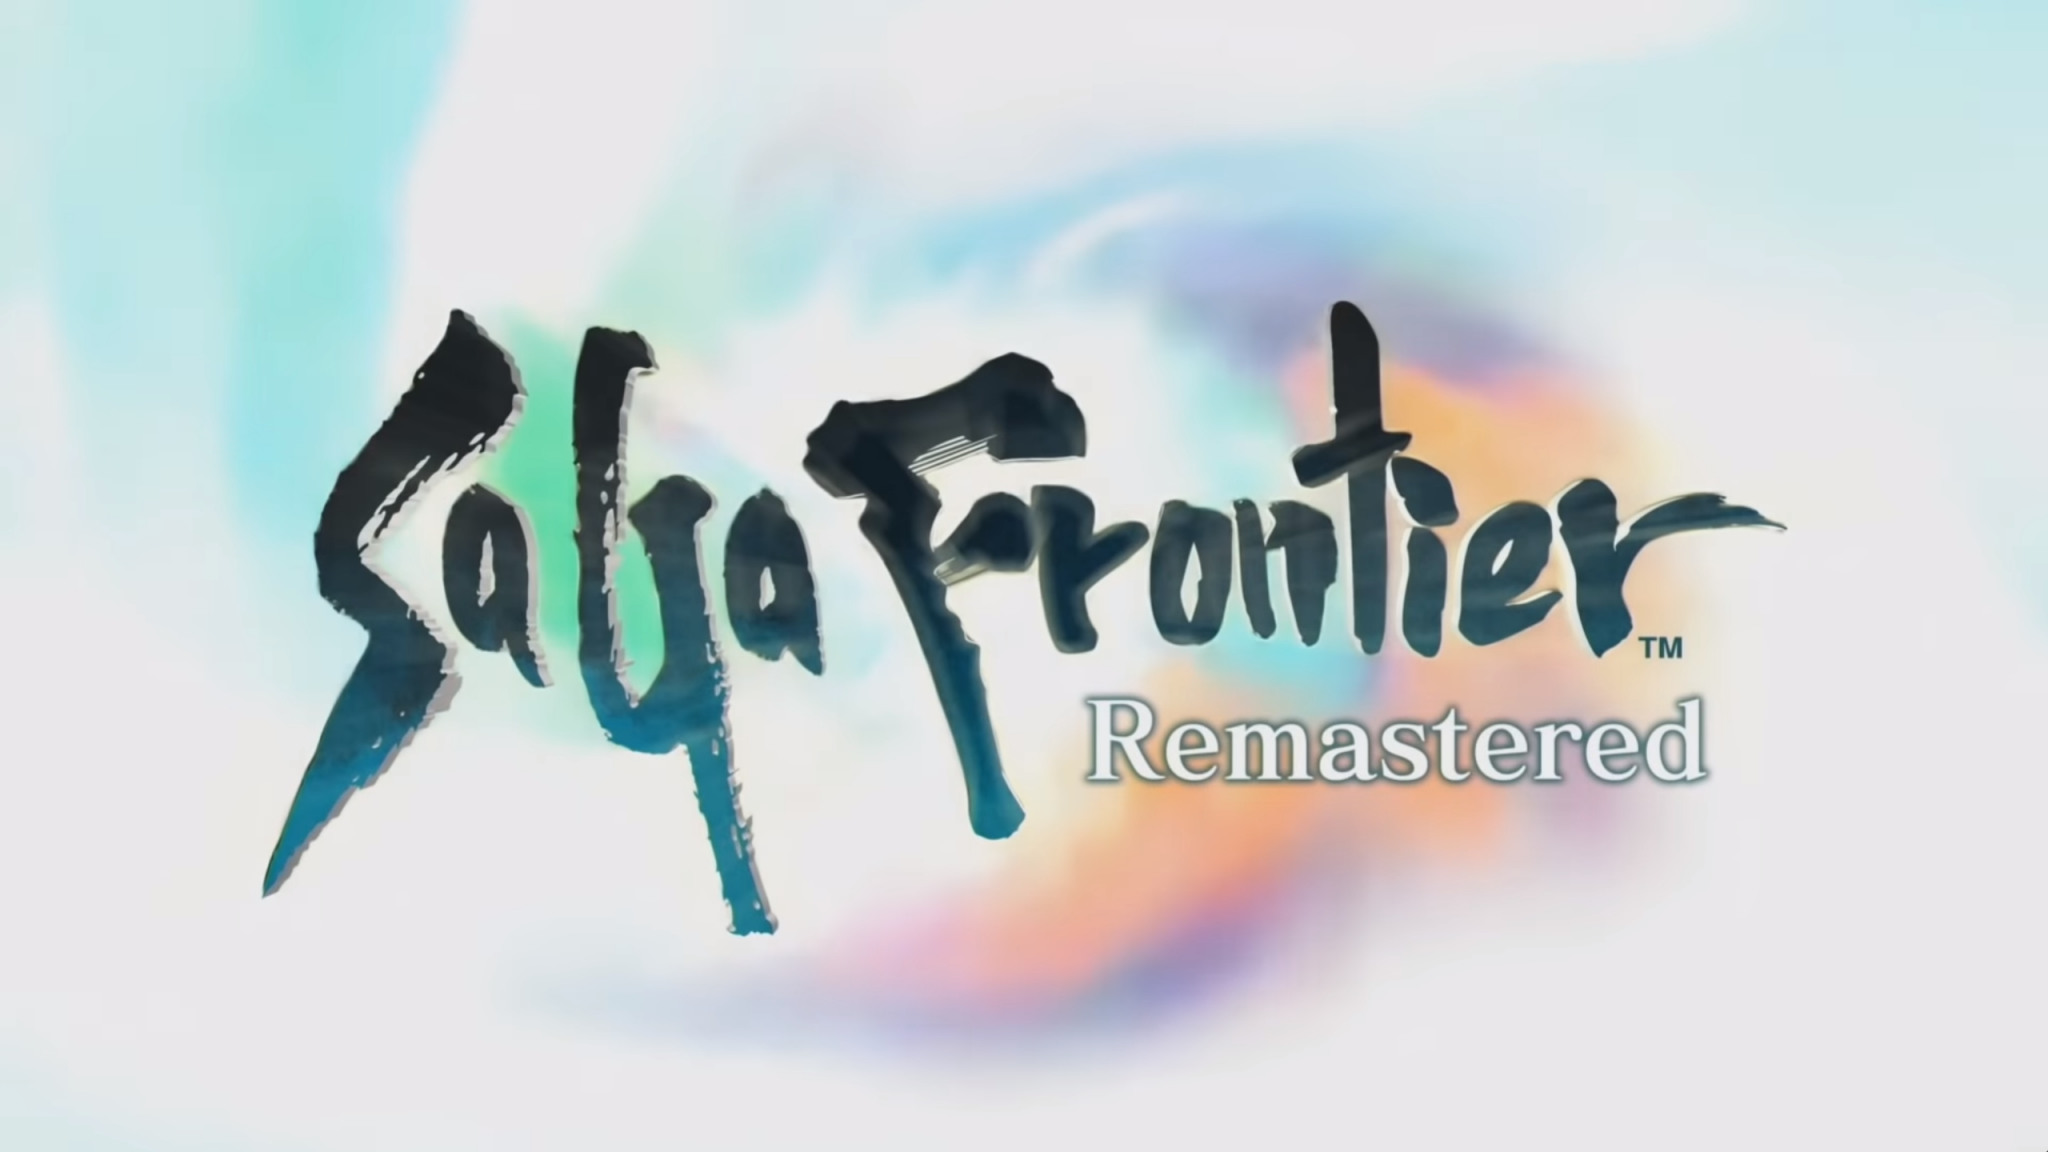 saga frontier remastered art